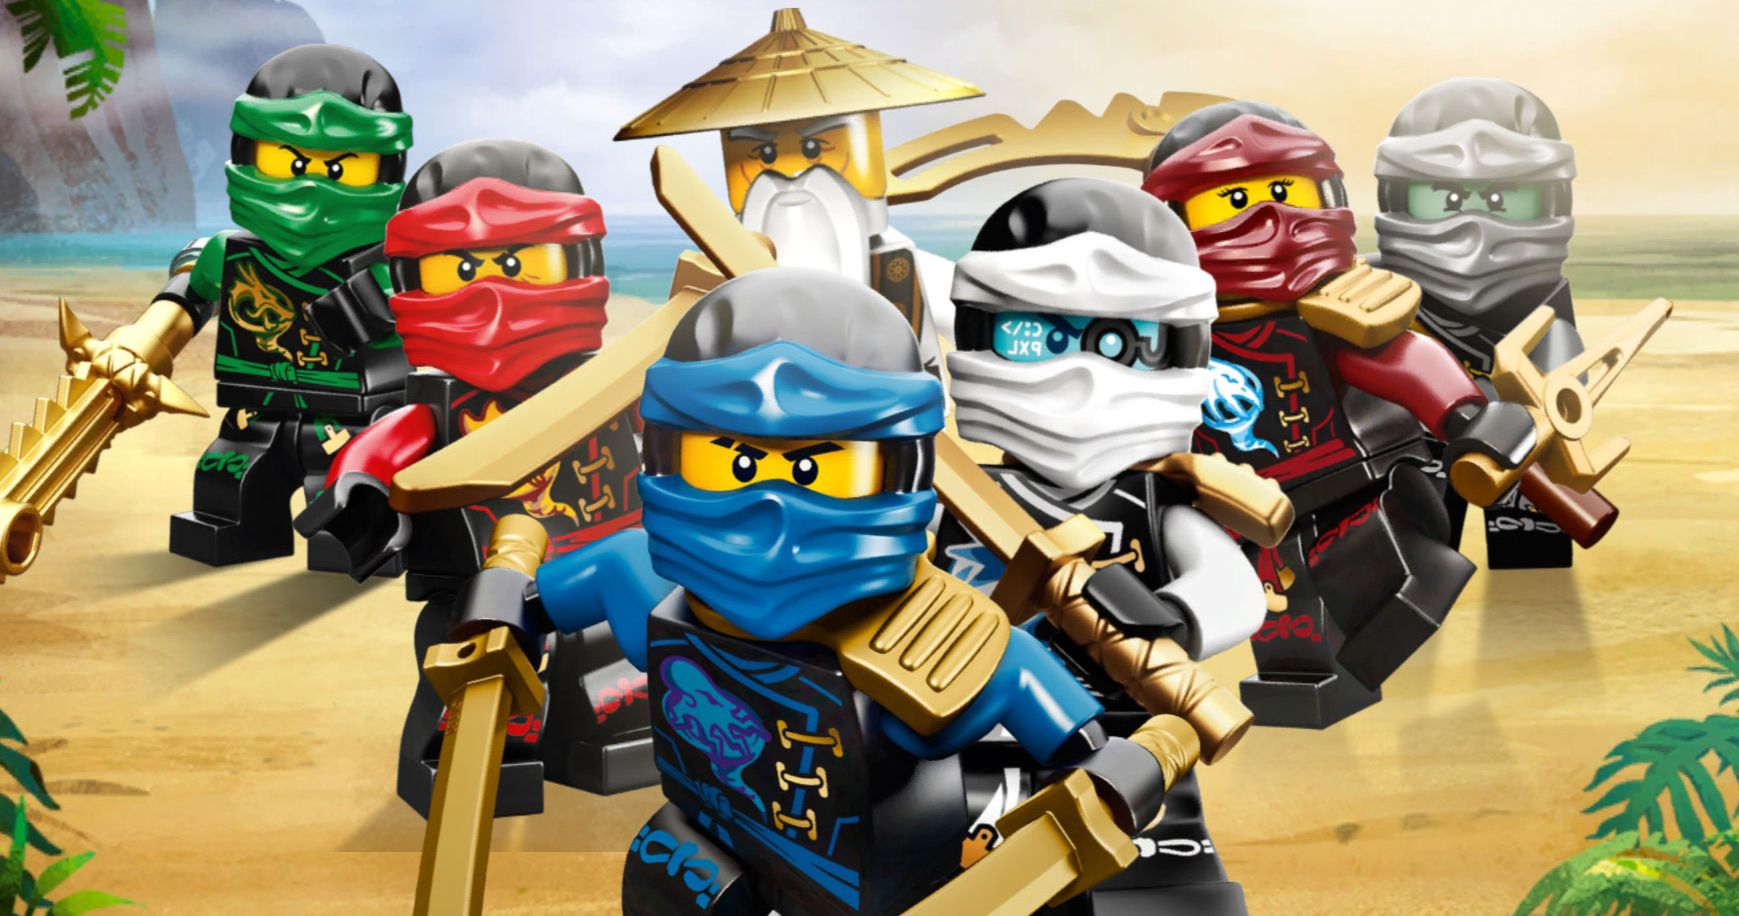 Lego Ninjago Movie Voice Cast, Characters and Plot Revealed